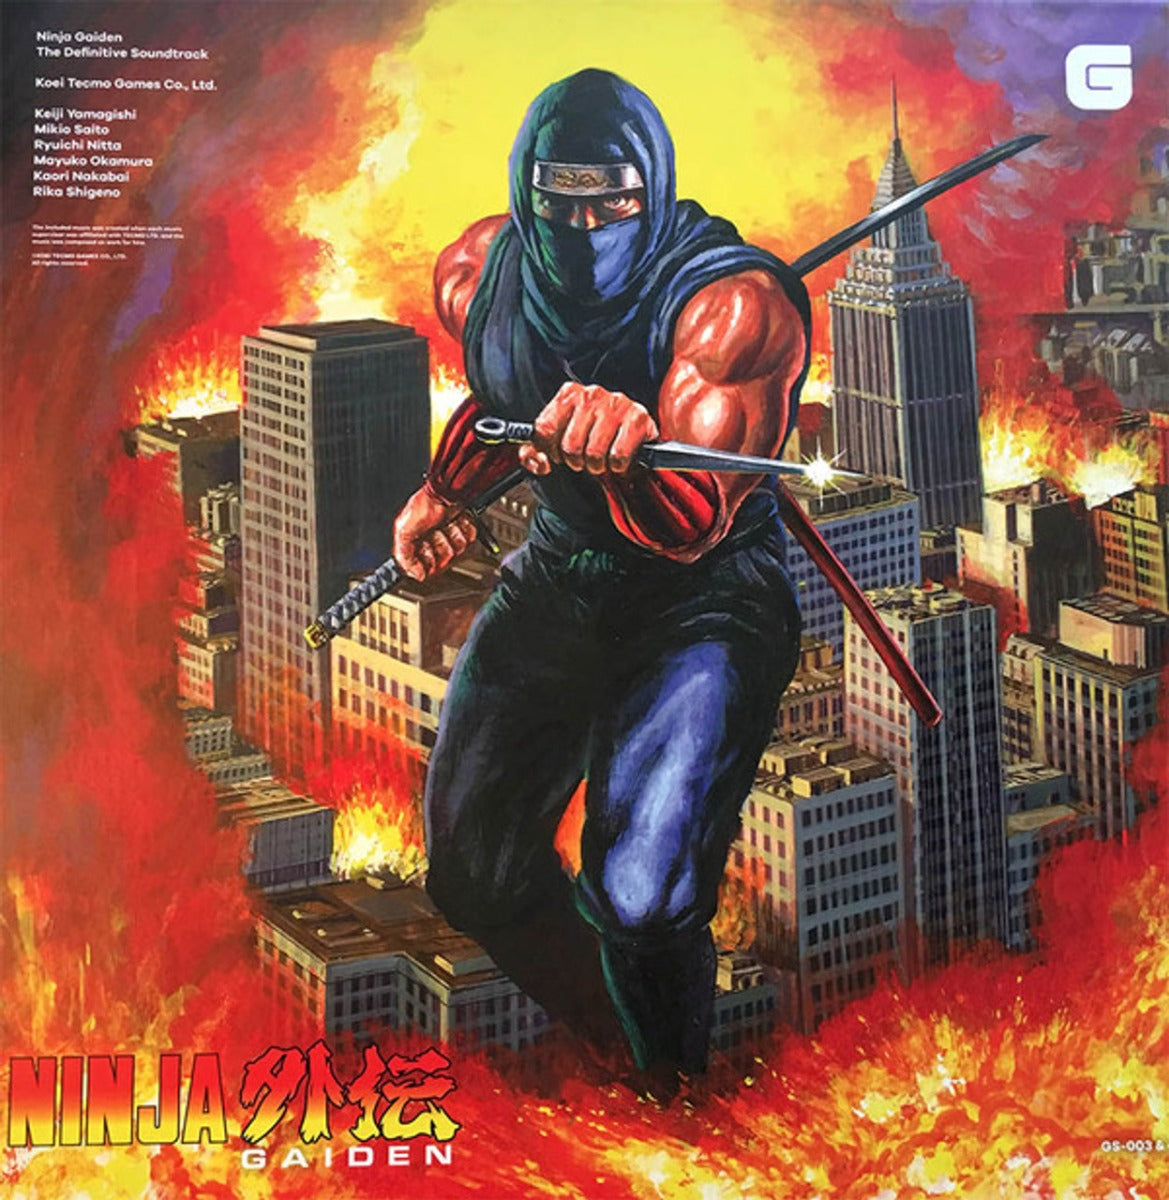 Ninja Gaiden: The Definitive Soundtrack